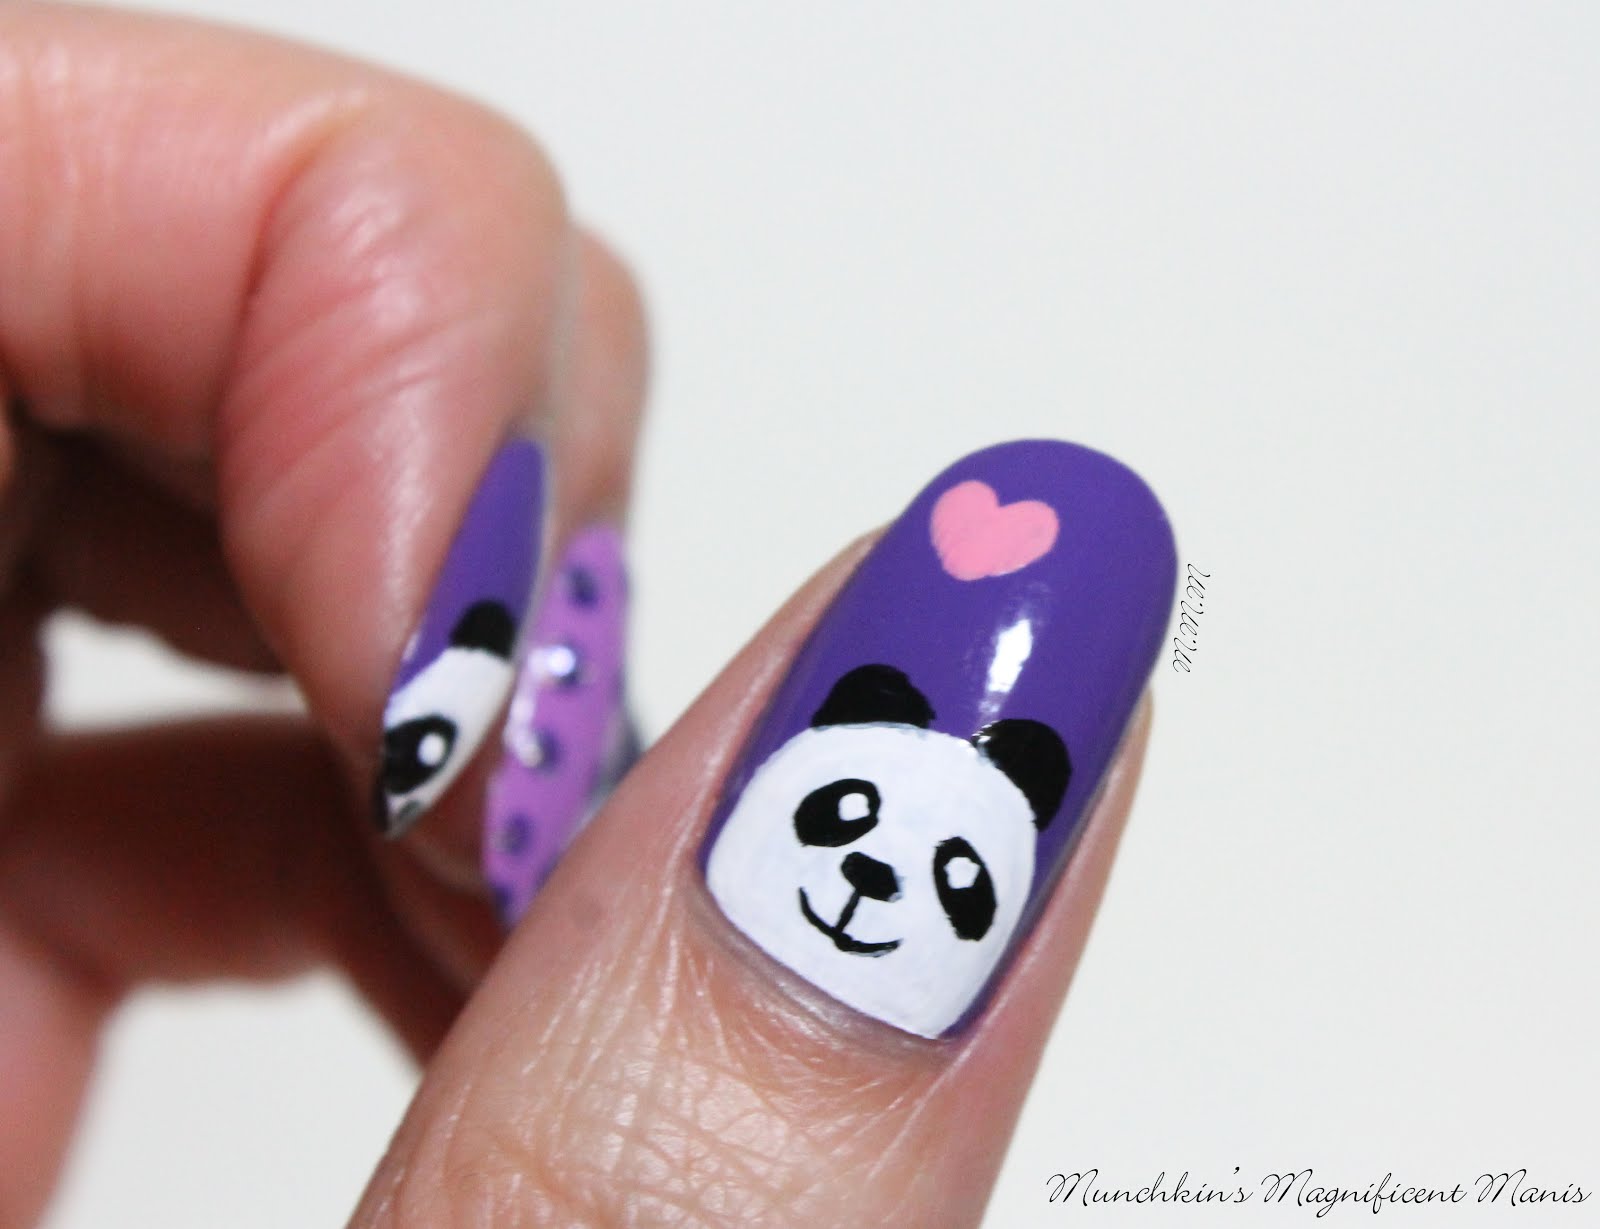 1. Cute Panda Nail Design Ideas - wide 4